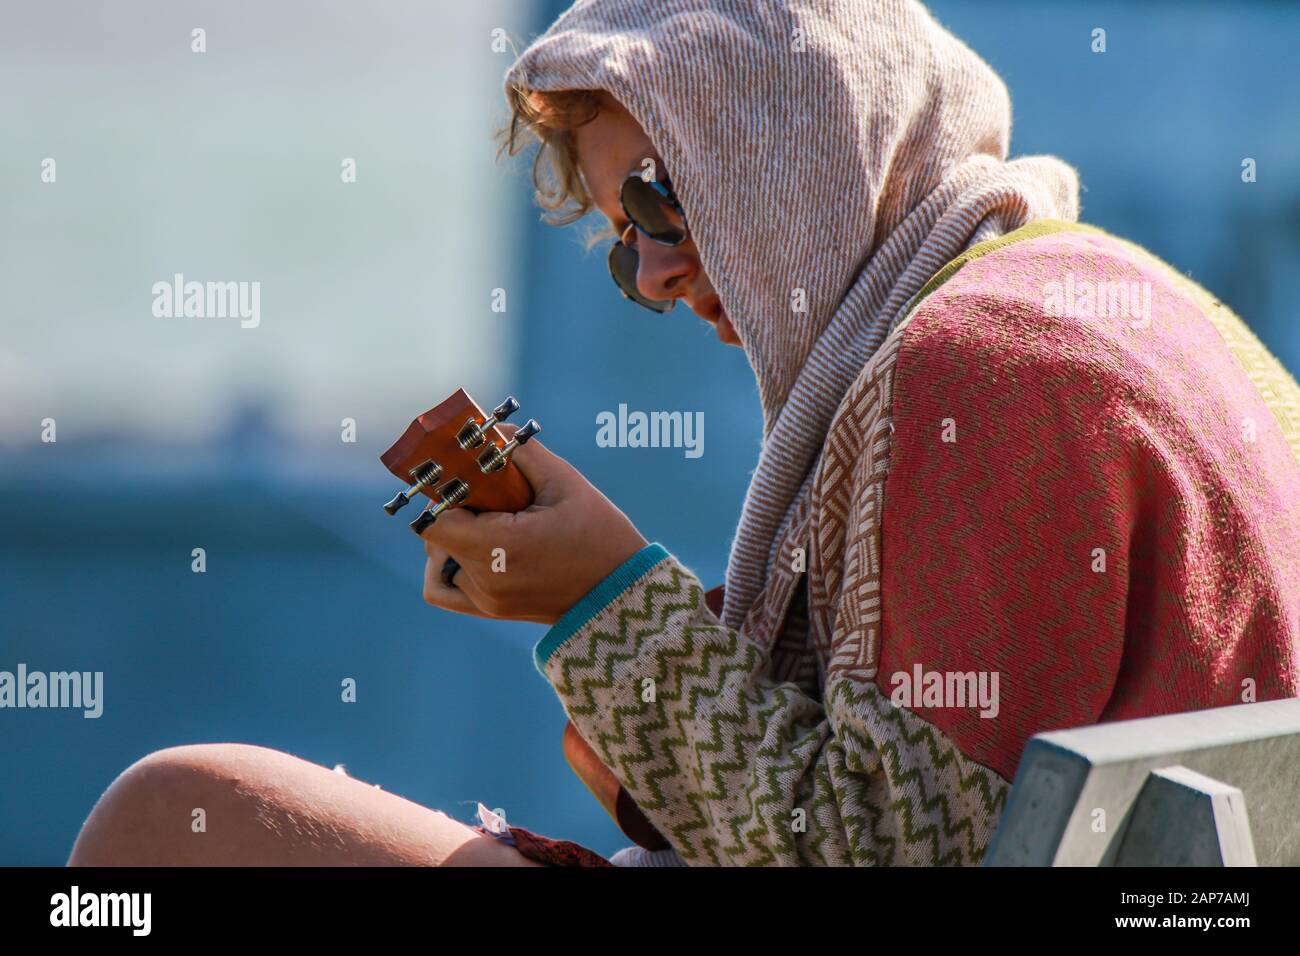 A woman with sunglasses, playing the ukulele Stock Photo